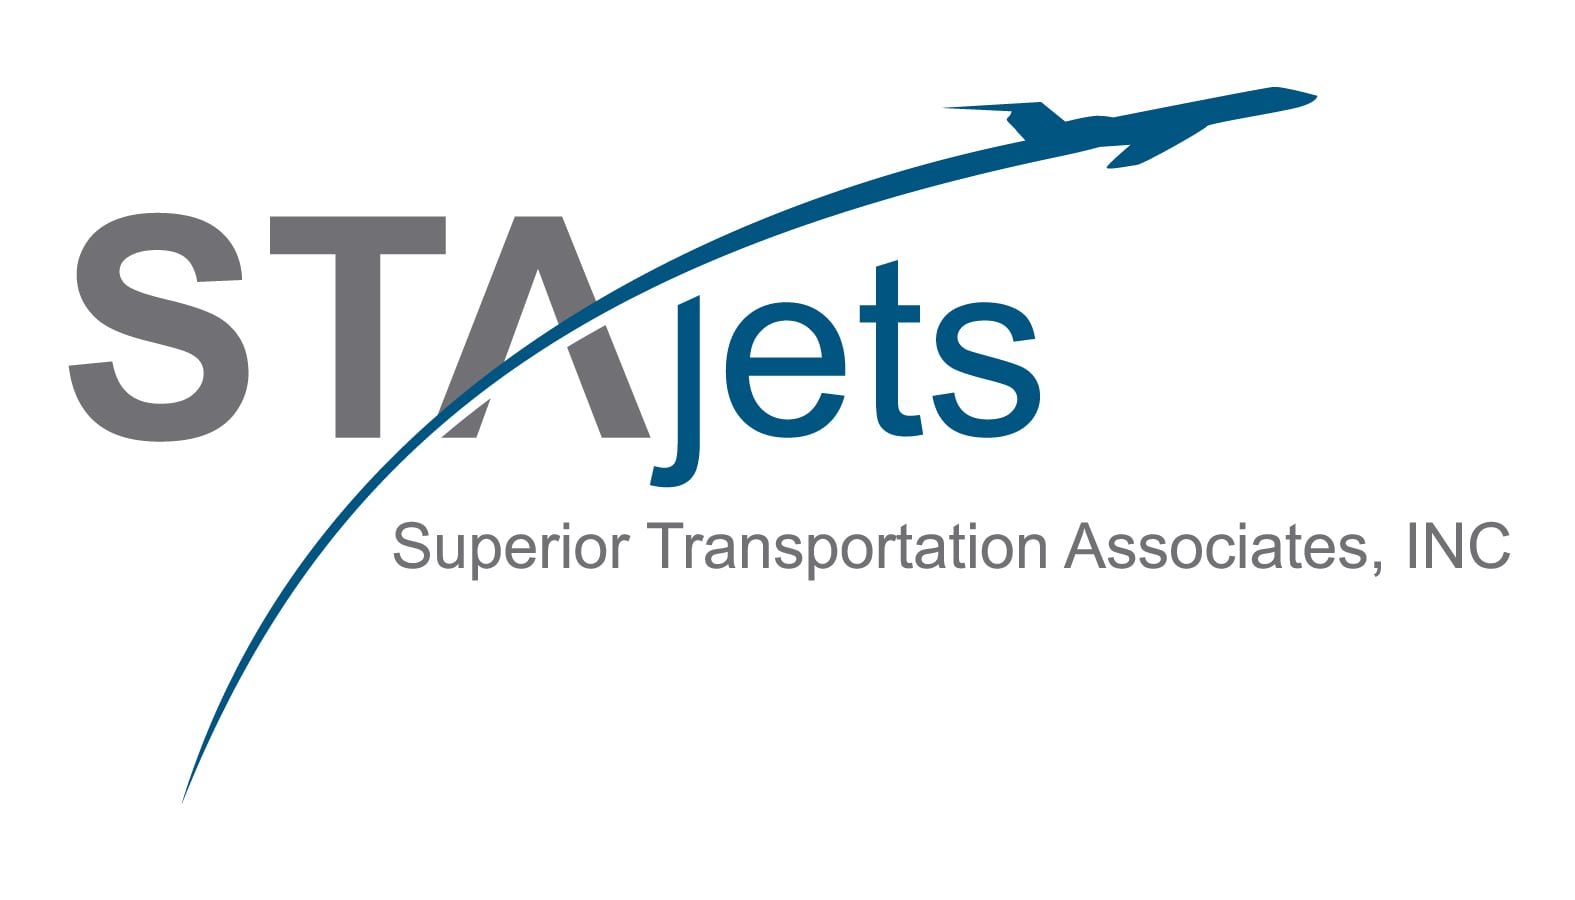 Sta Logo - STA-Jets-logo - STA Jets